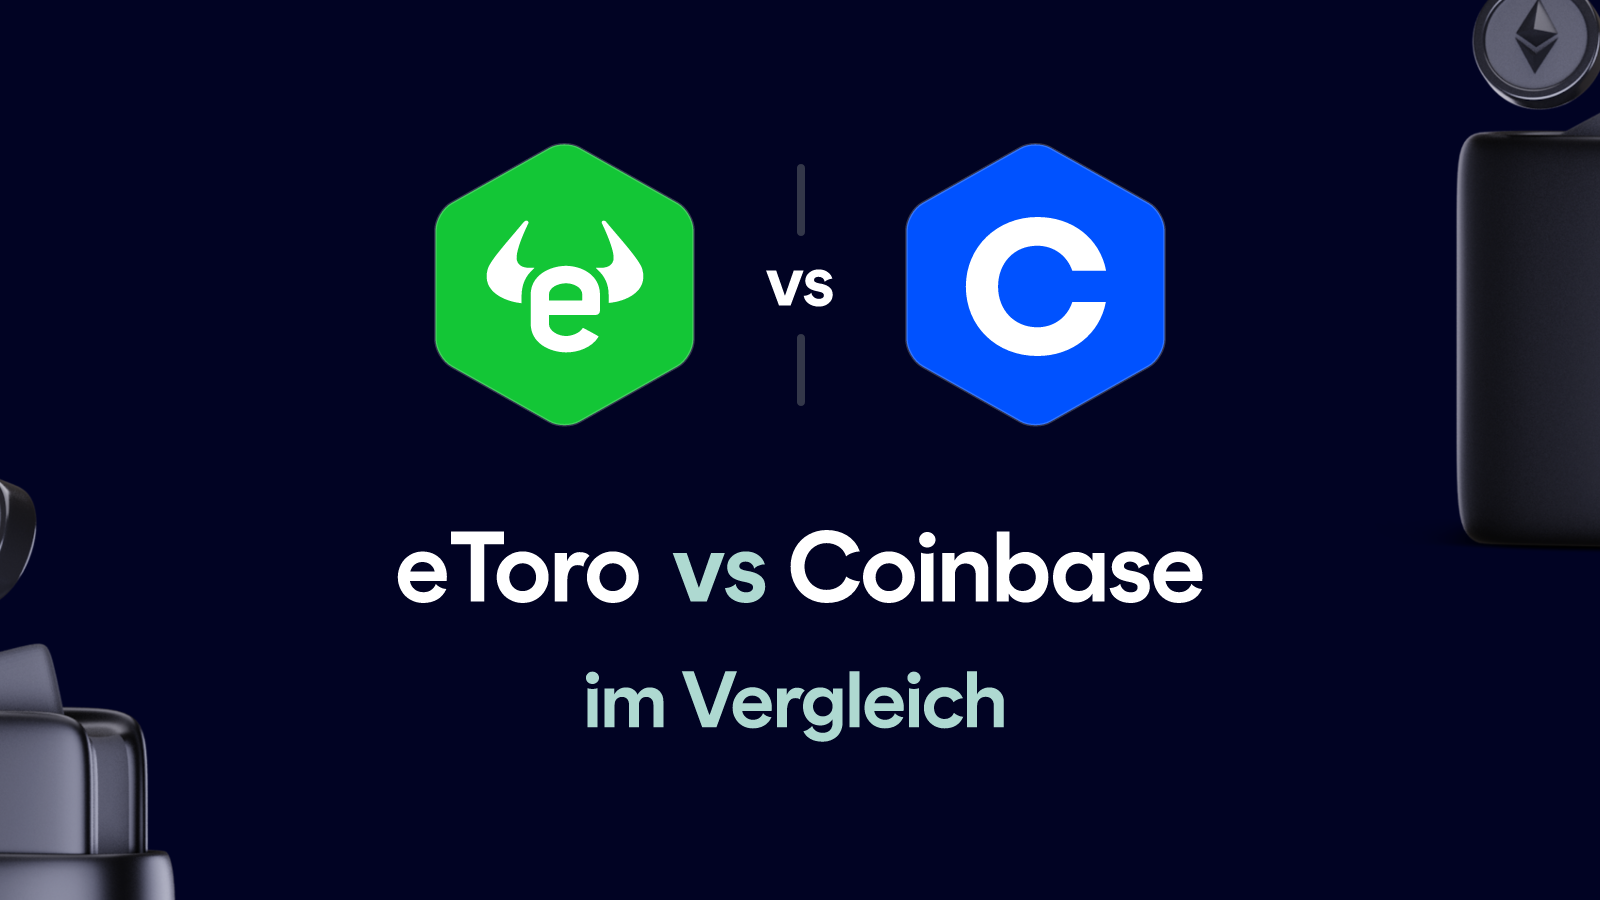 eToro vs Coinbase im Vergleich